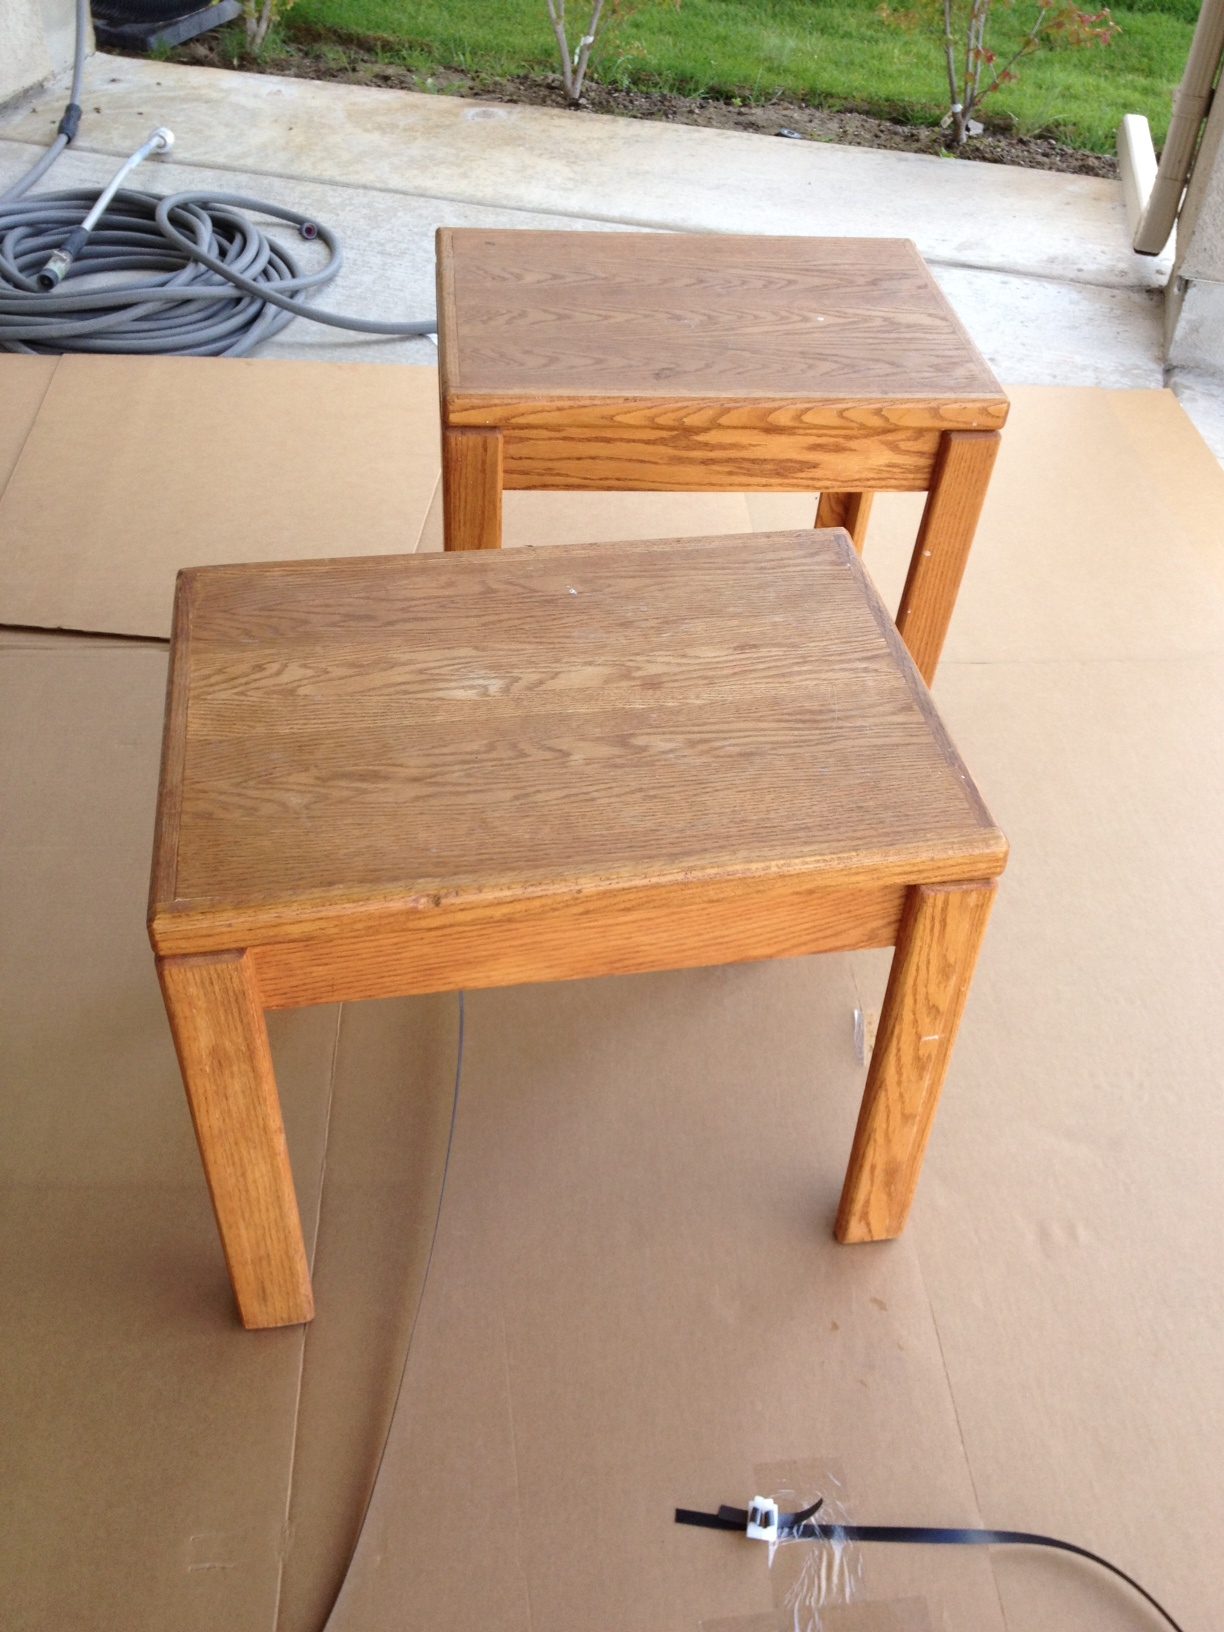 DIY combo light table/train table/coffee table (aka, the furniture